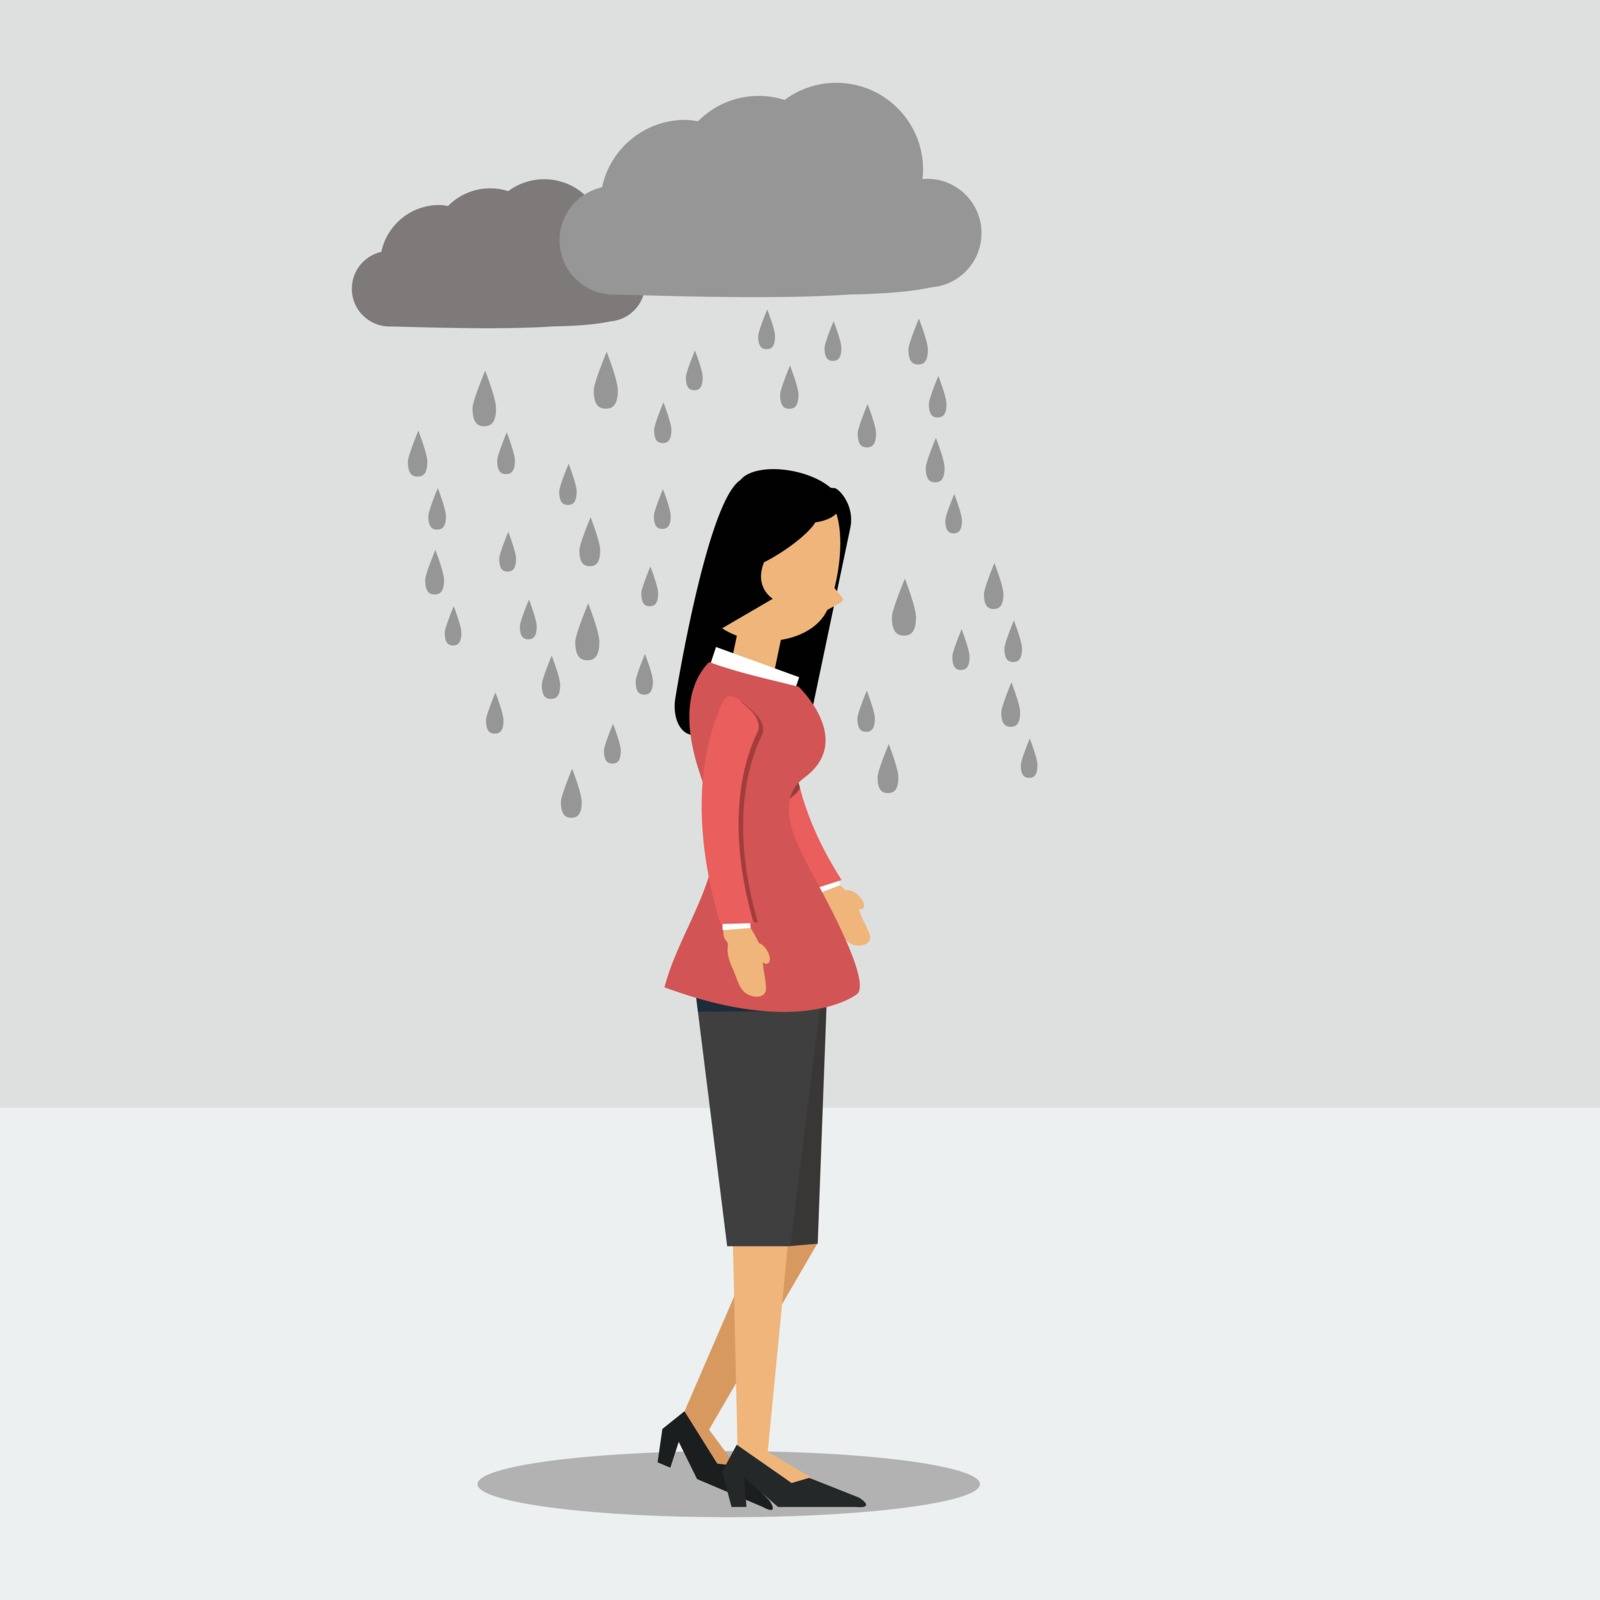 Depressed woman under the rain by SergeyVasutin